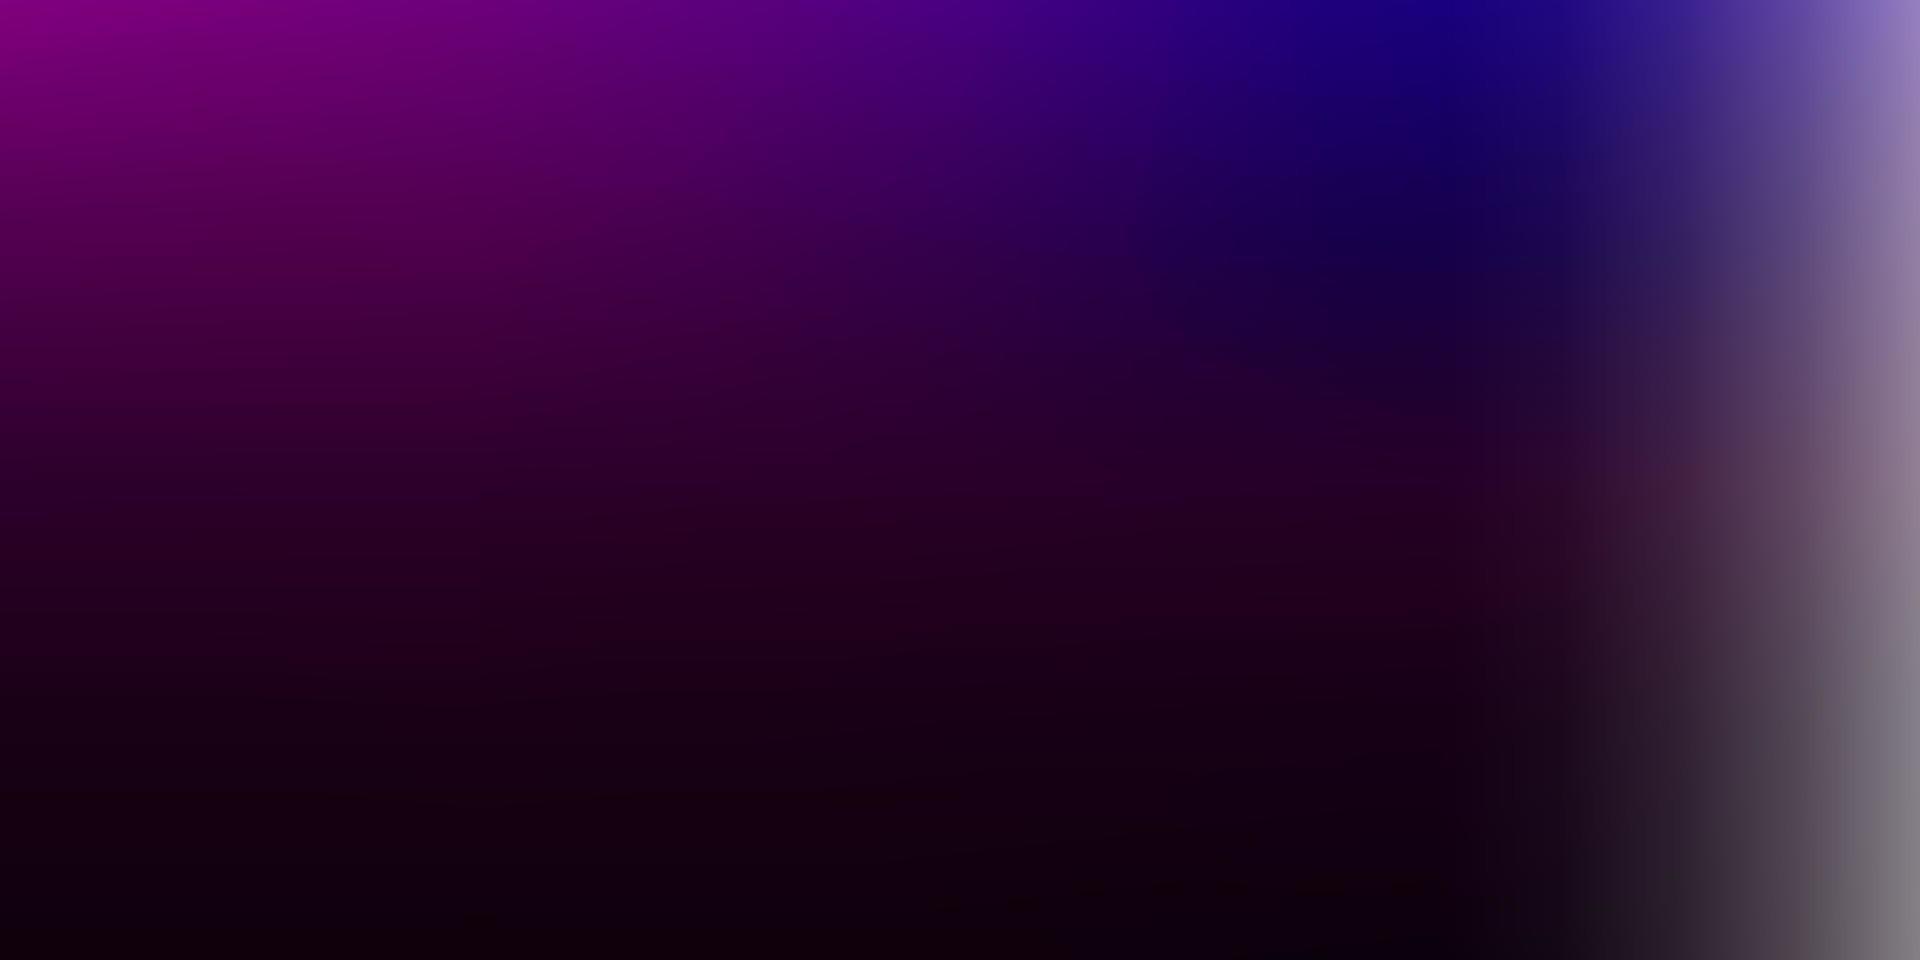 Light purple, pink vector gradient blur backdrop.